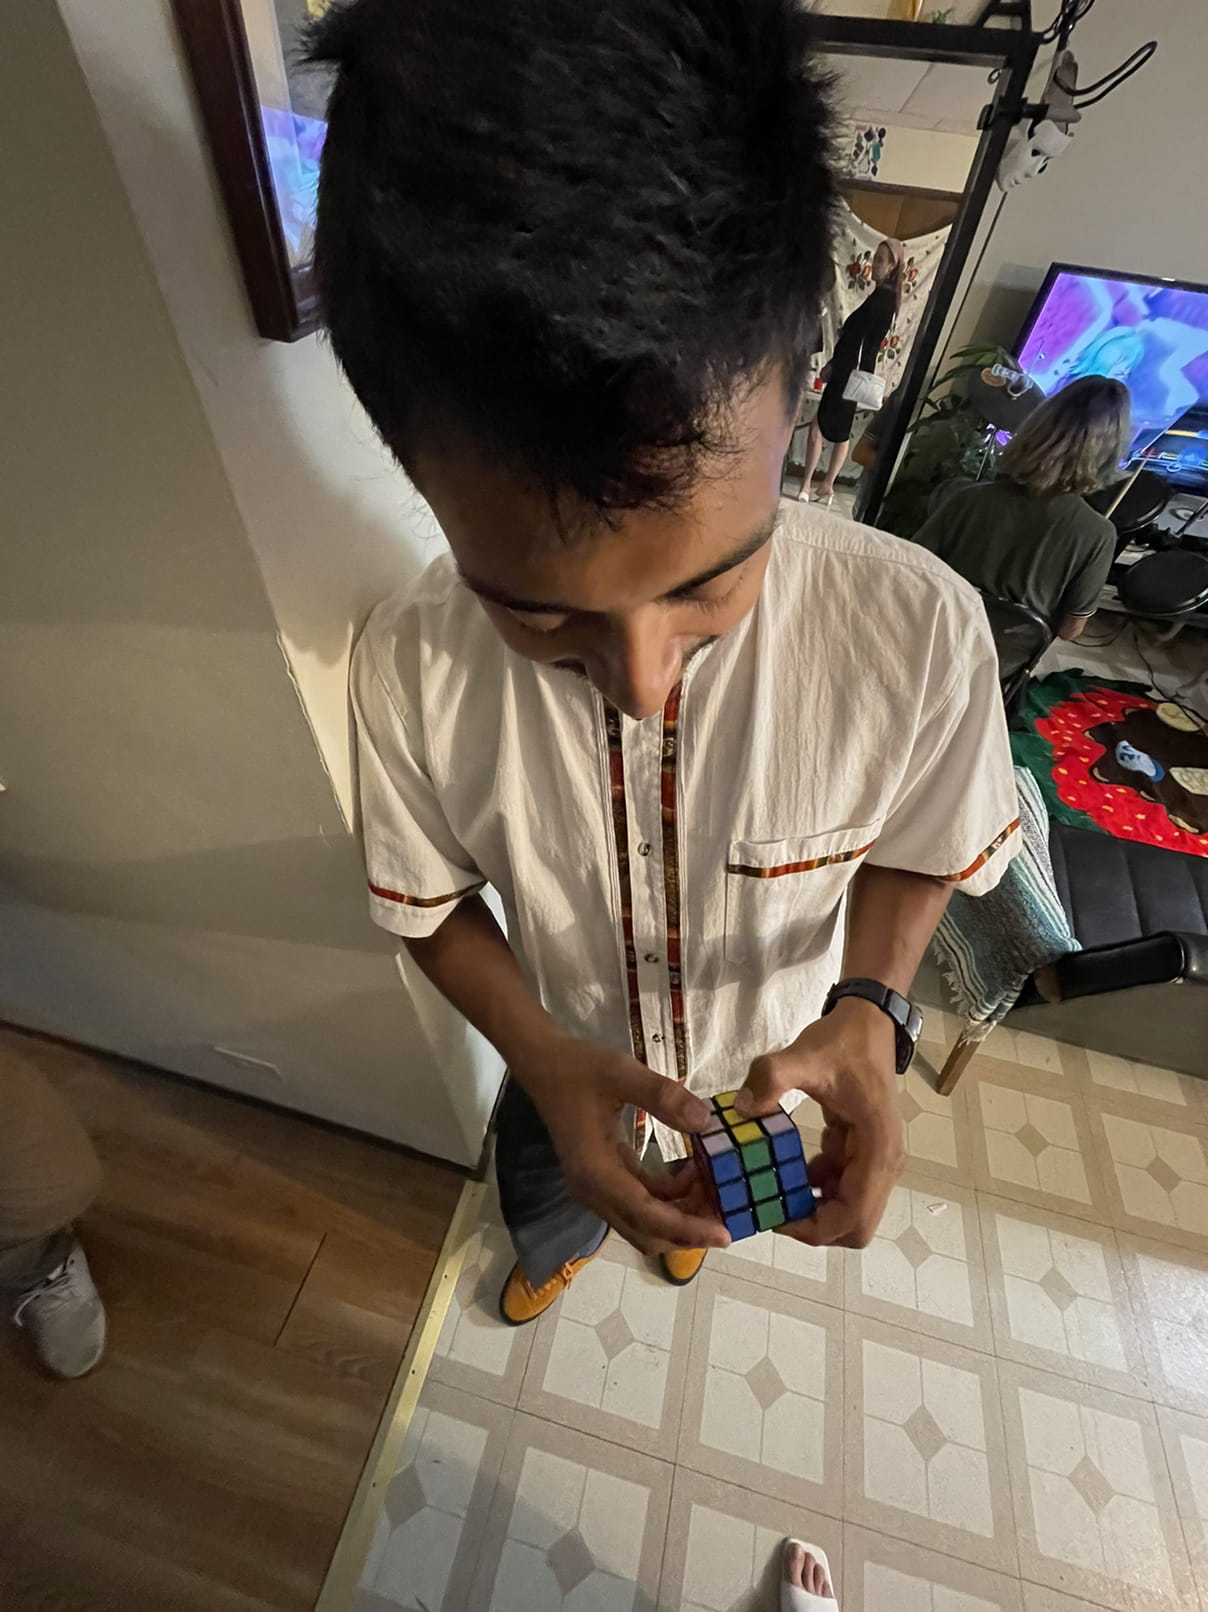 Alex solving a rubix cube at his housewarming party